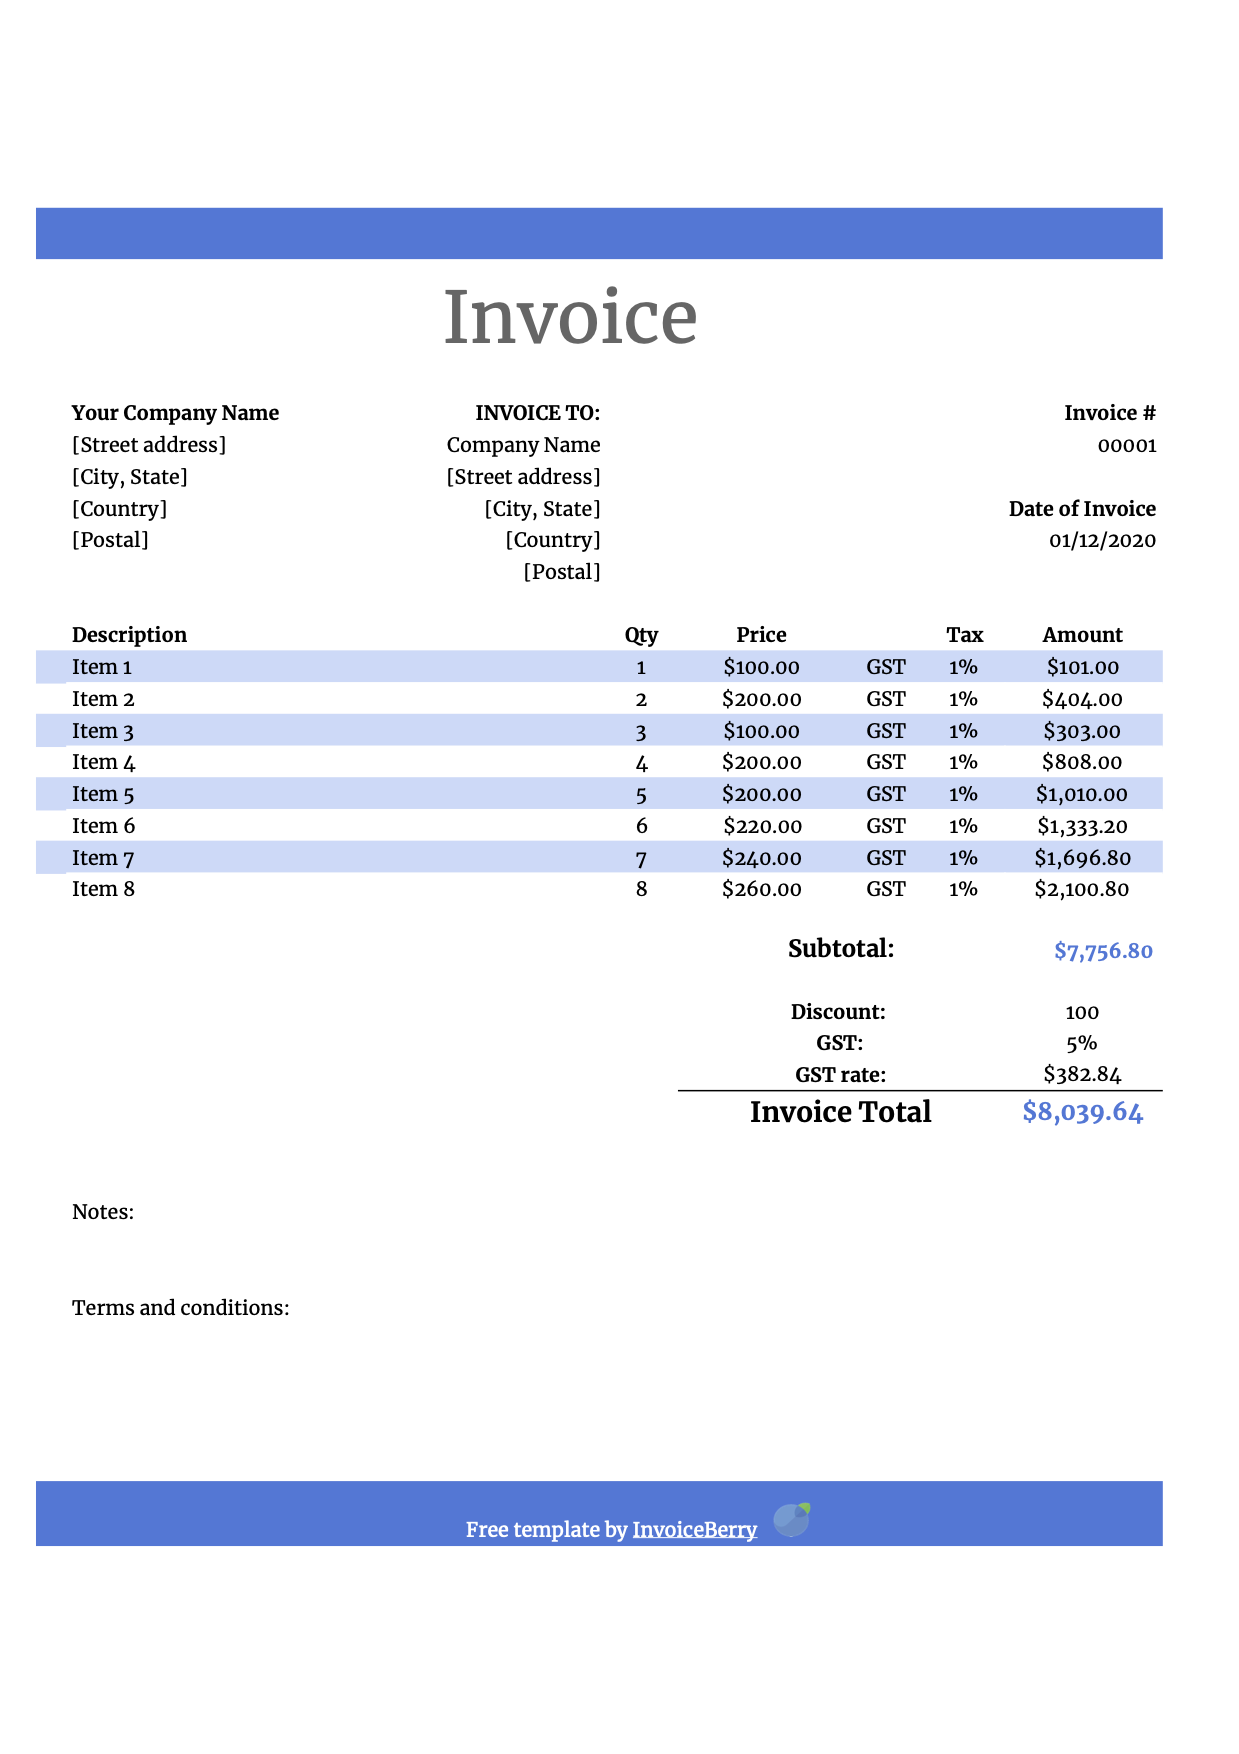 Google Sheet Invoice Template (1)